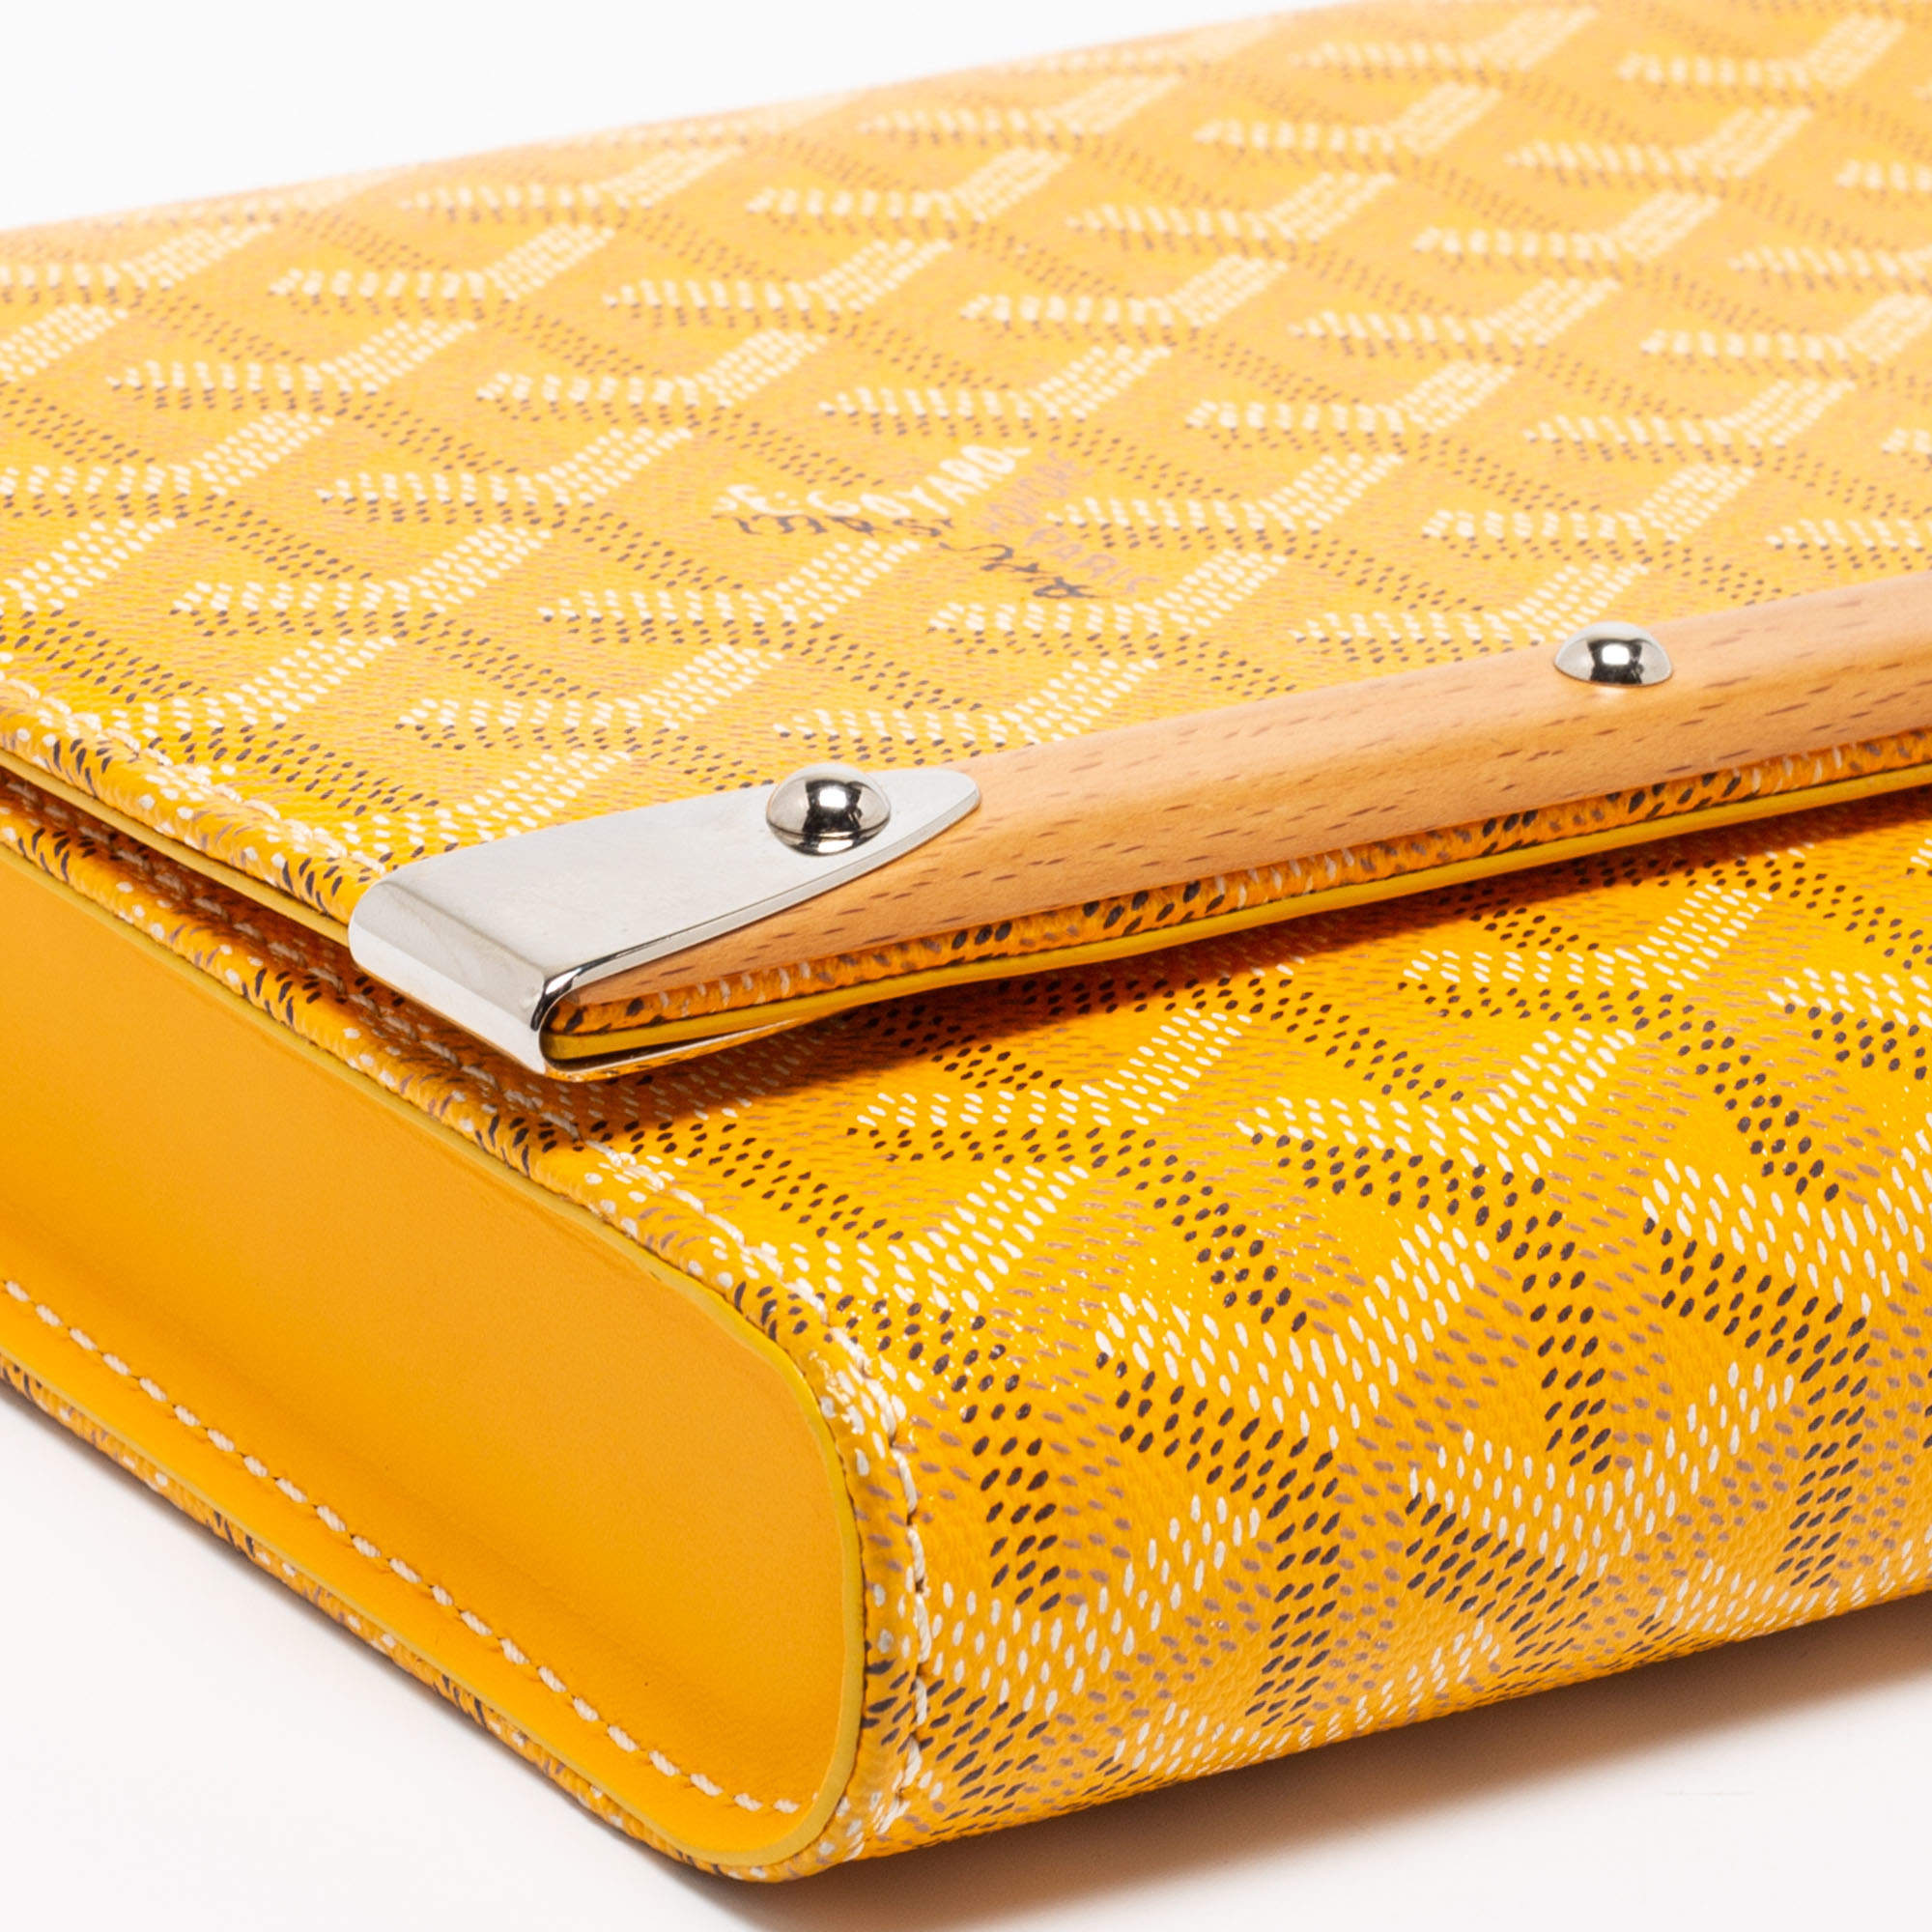 Goyard Goyardine Yellow Monte Carlo PM Clutch/Shoulder Bag Silver Hardware